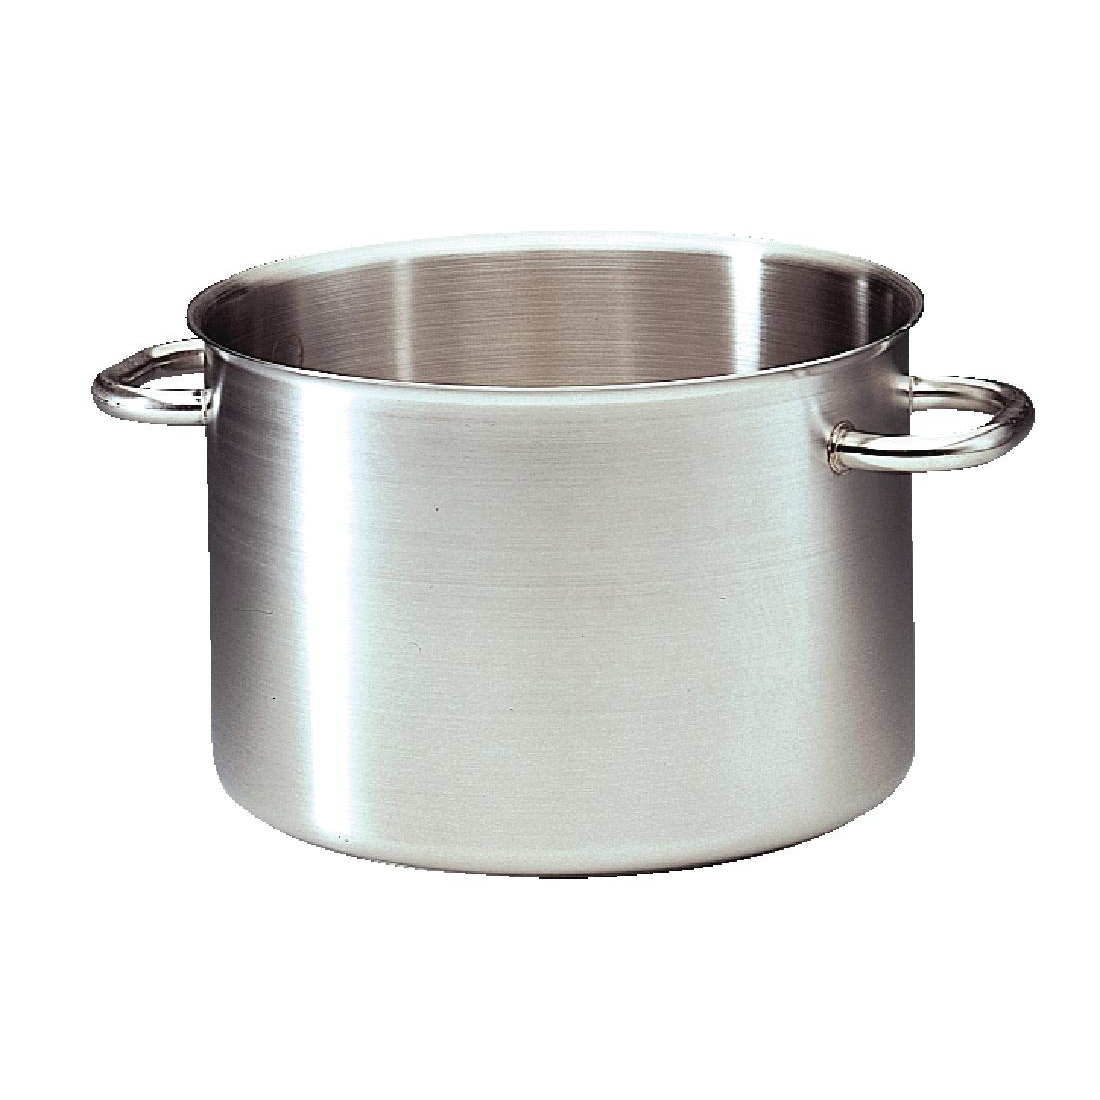 Bourgeat Excellence Boiling Pot 24Ltr